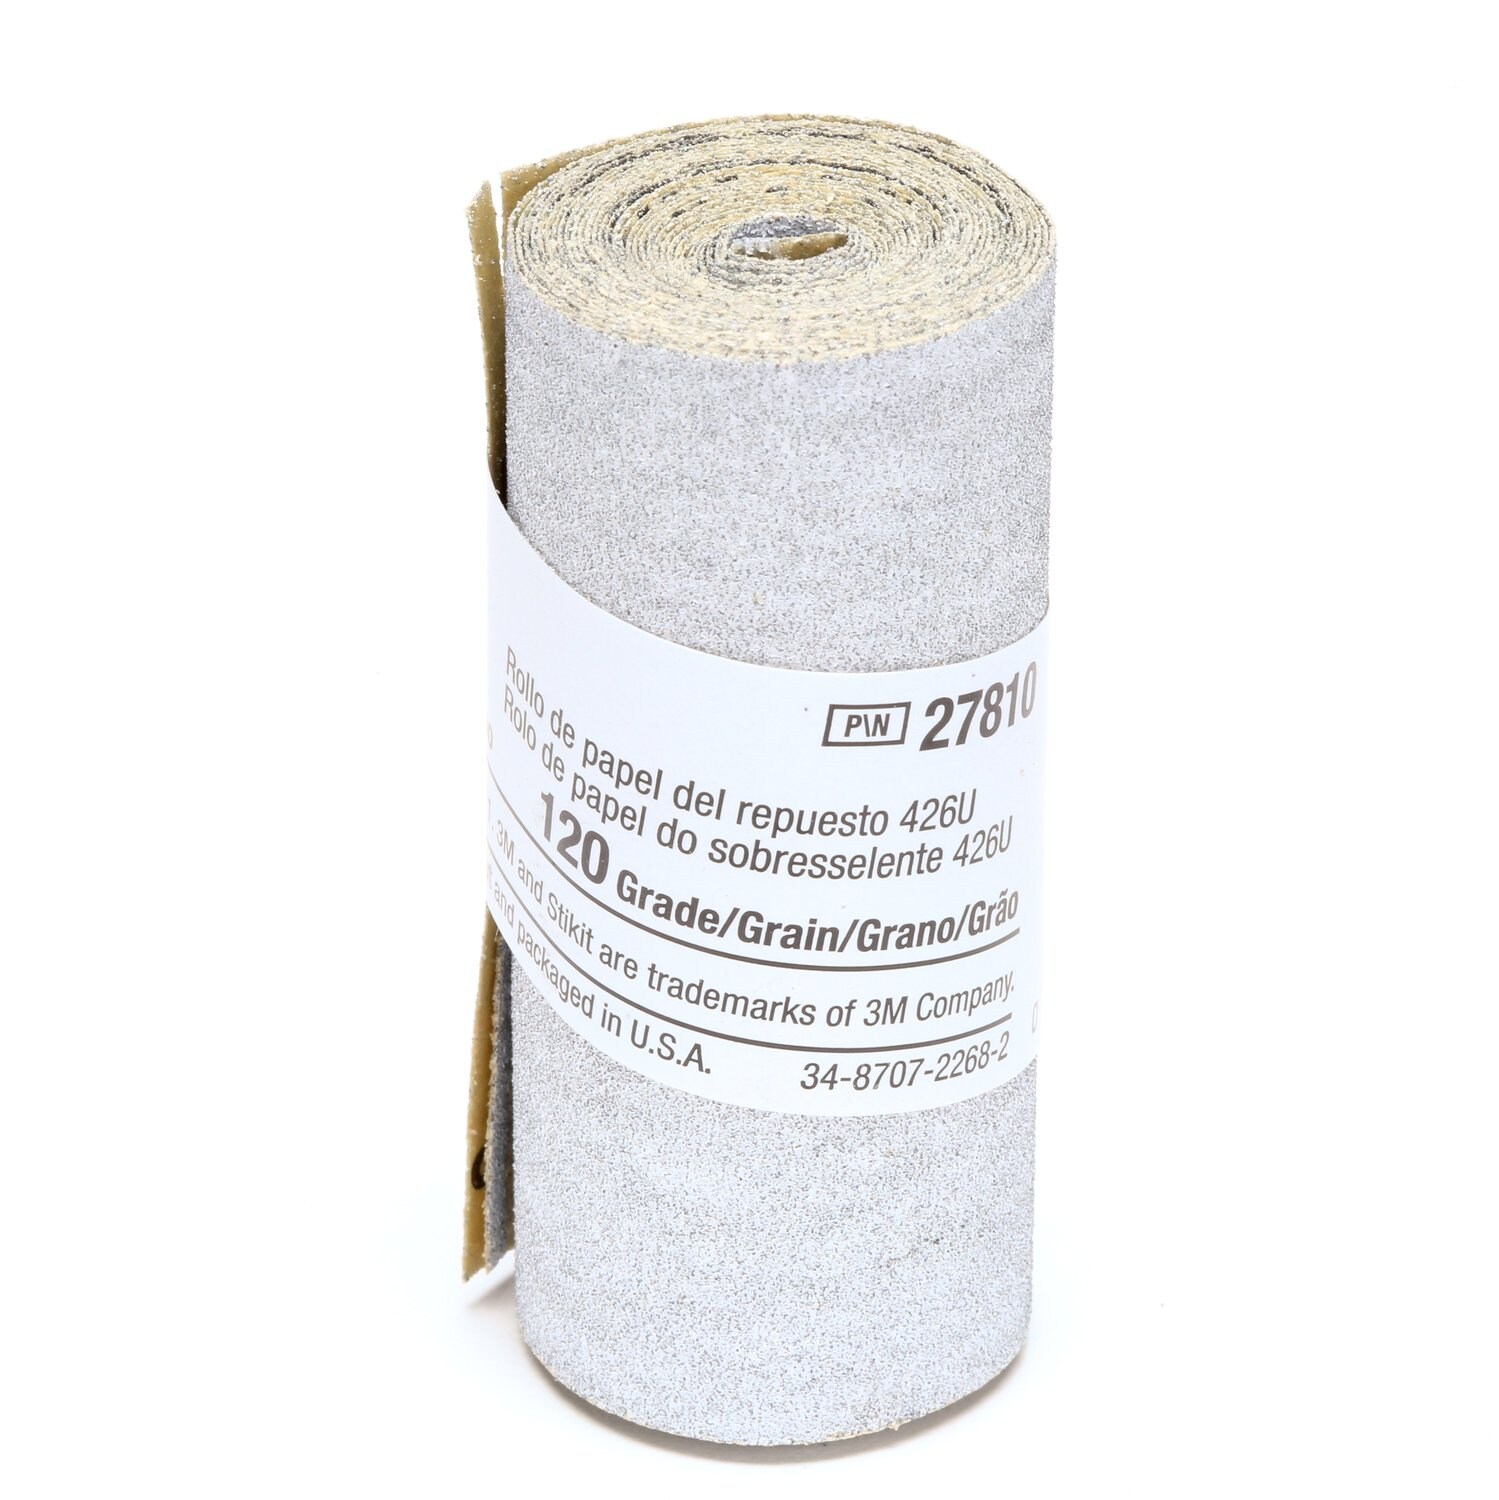 7000045199 - 3M Stikit Paper Refill Roll 426U, 120 A-weight, 2-1/2 in x 70 in,
10/Carton, 50 ea/Case